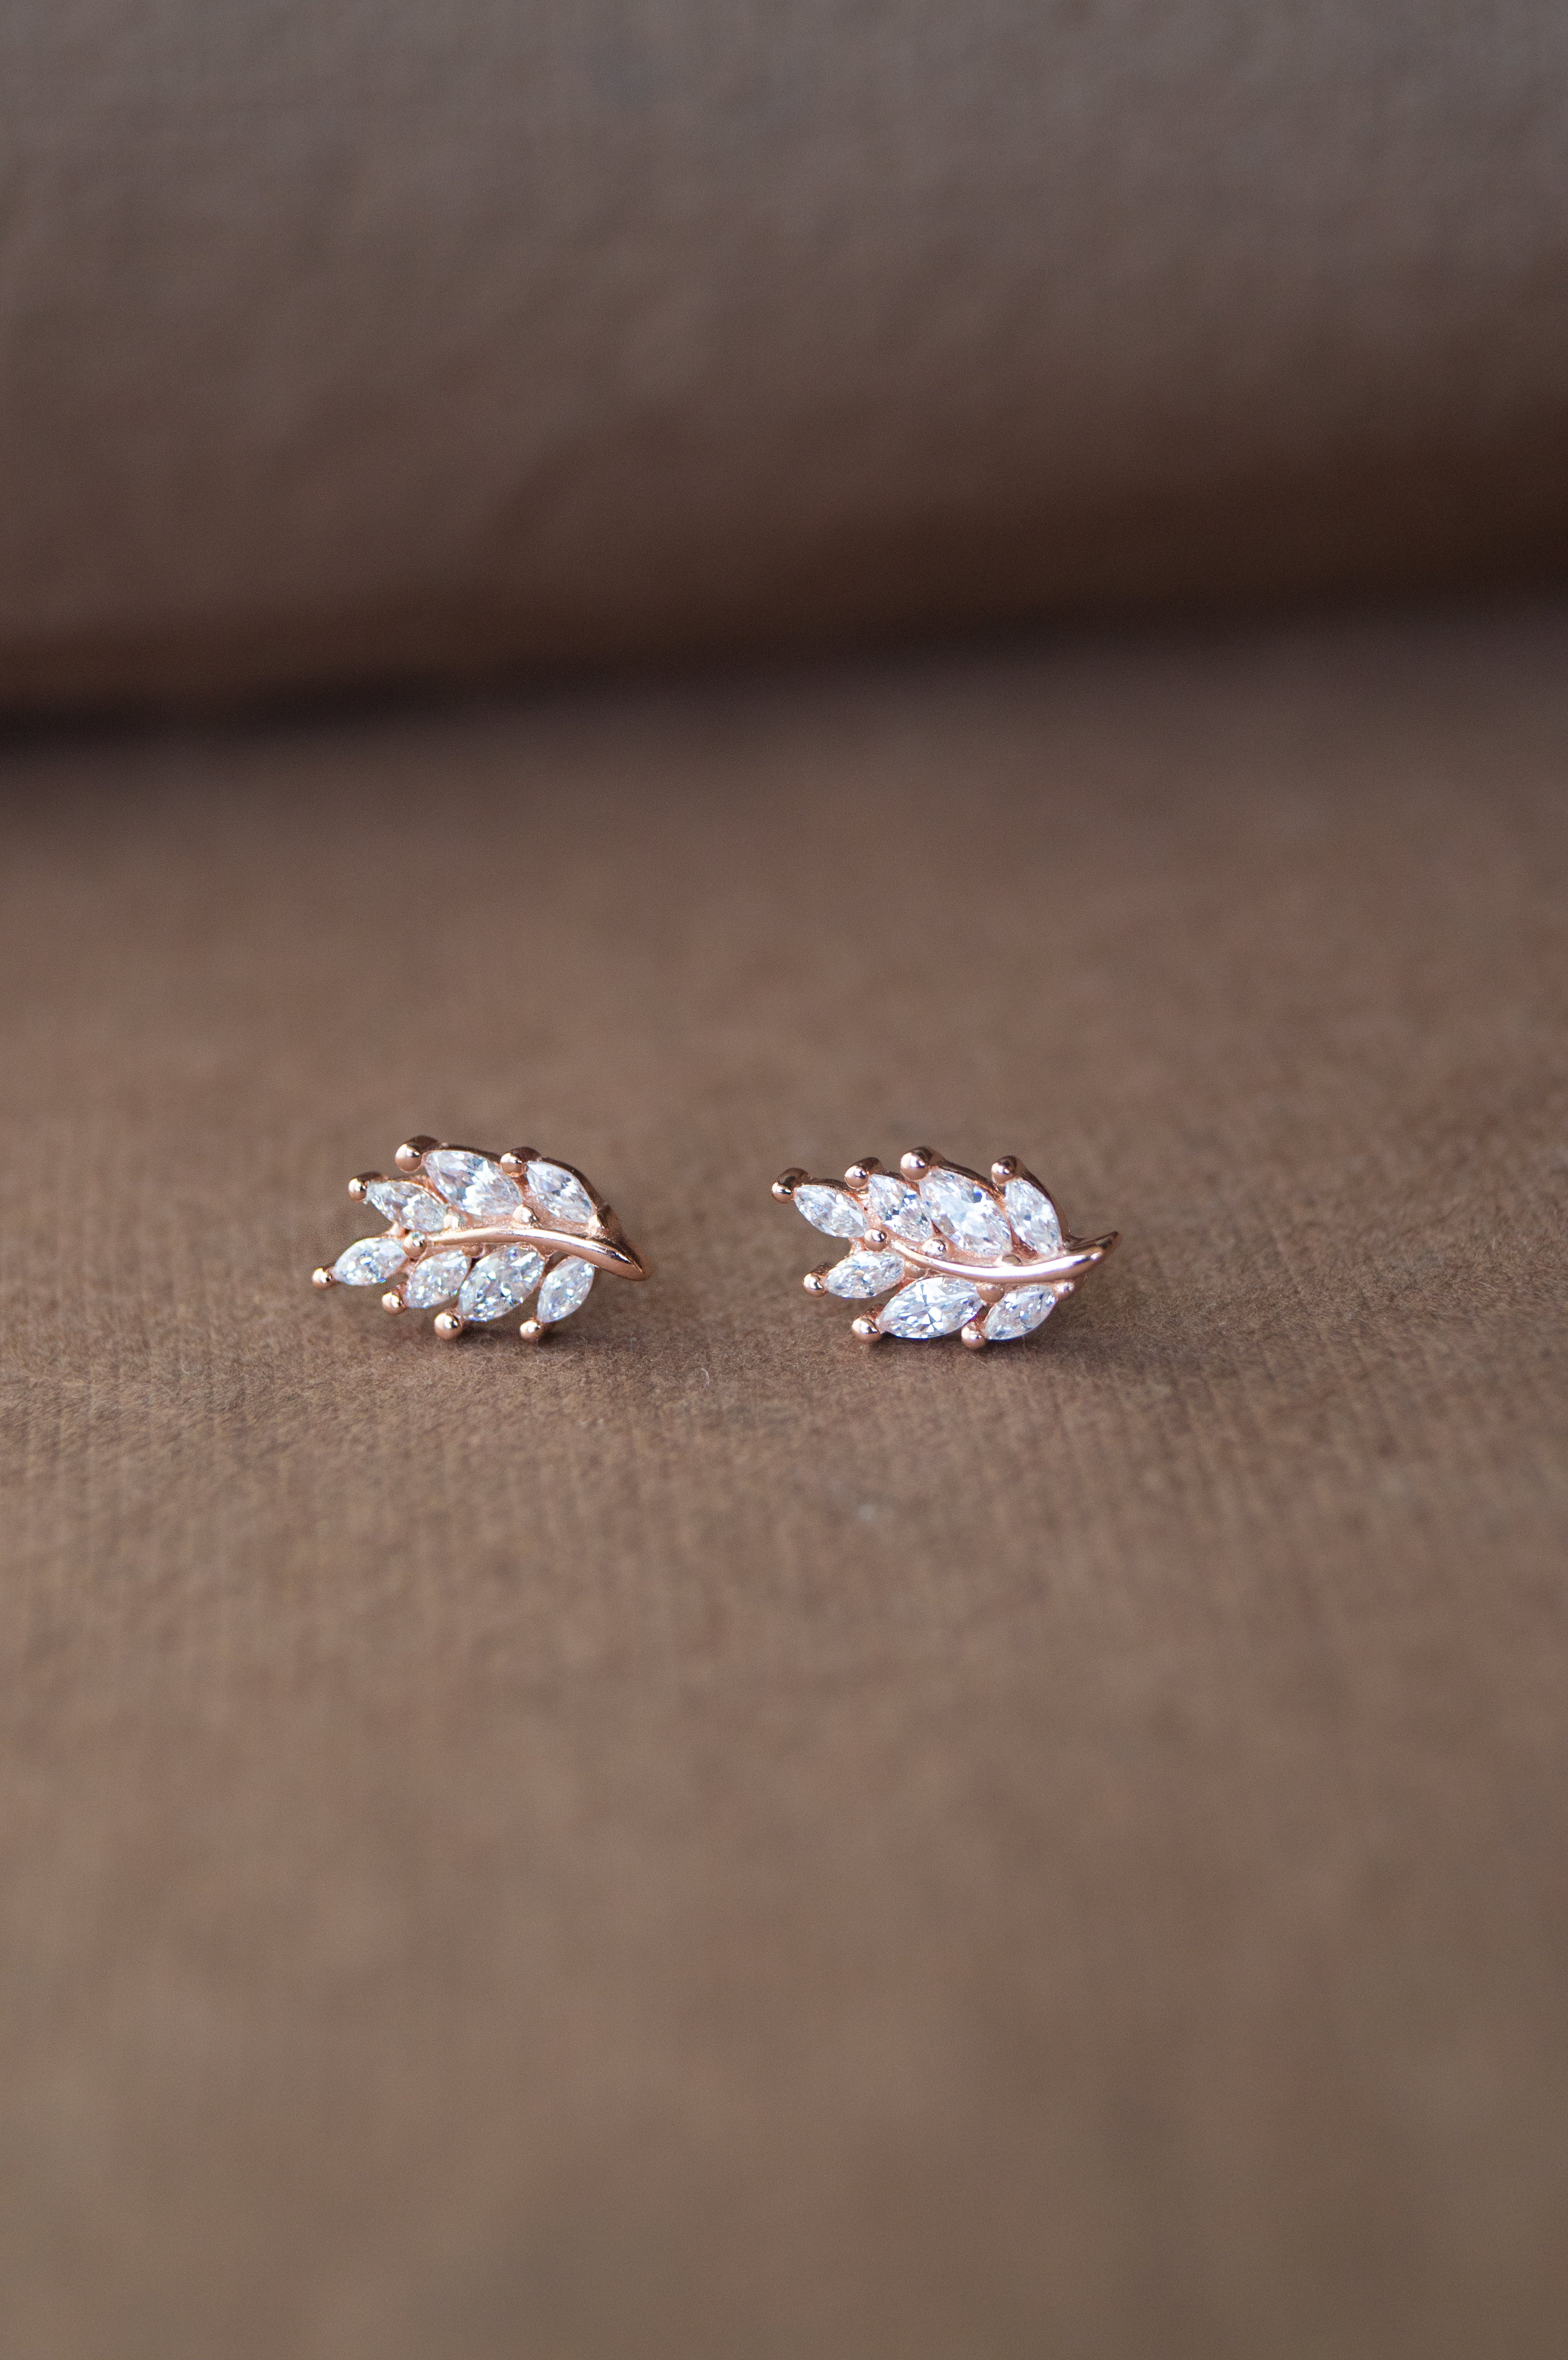 Shop Simple Rose Gold Drop Pearl Earrings for Brides & Bridesmaids –  PoetryDesigns